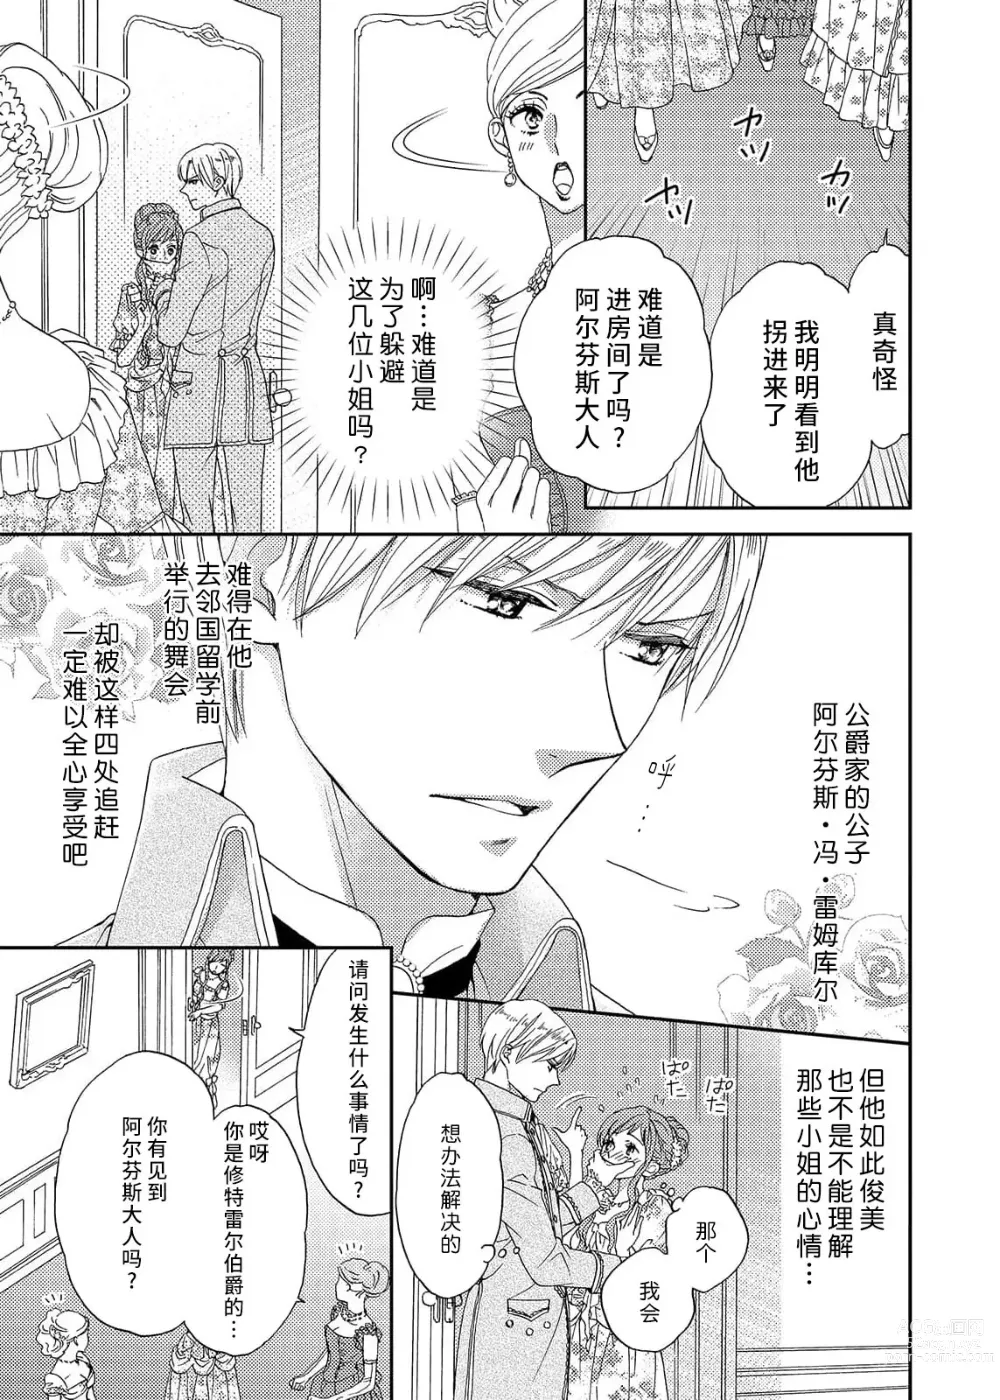 Page 7 of manga 甜蜜的鸟笼